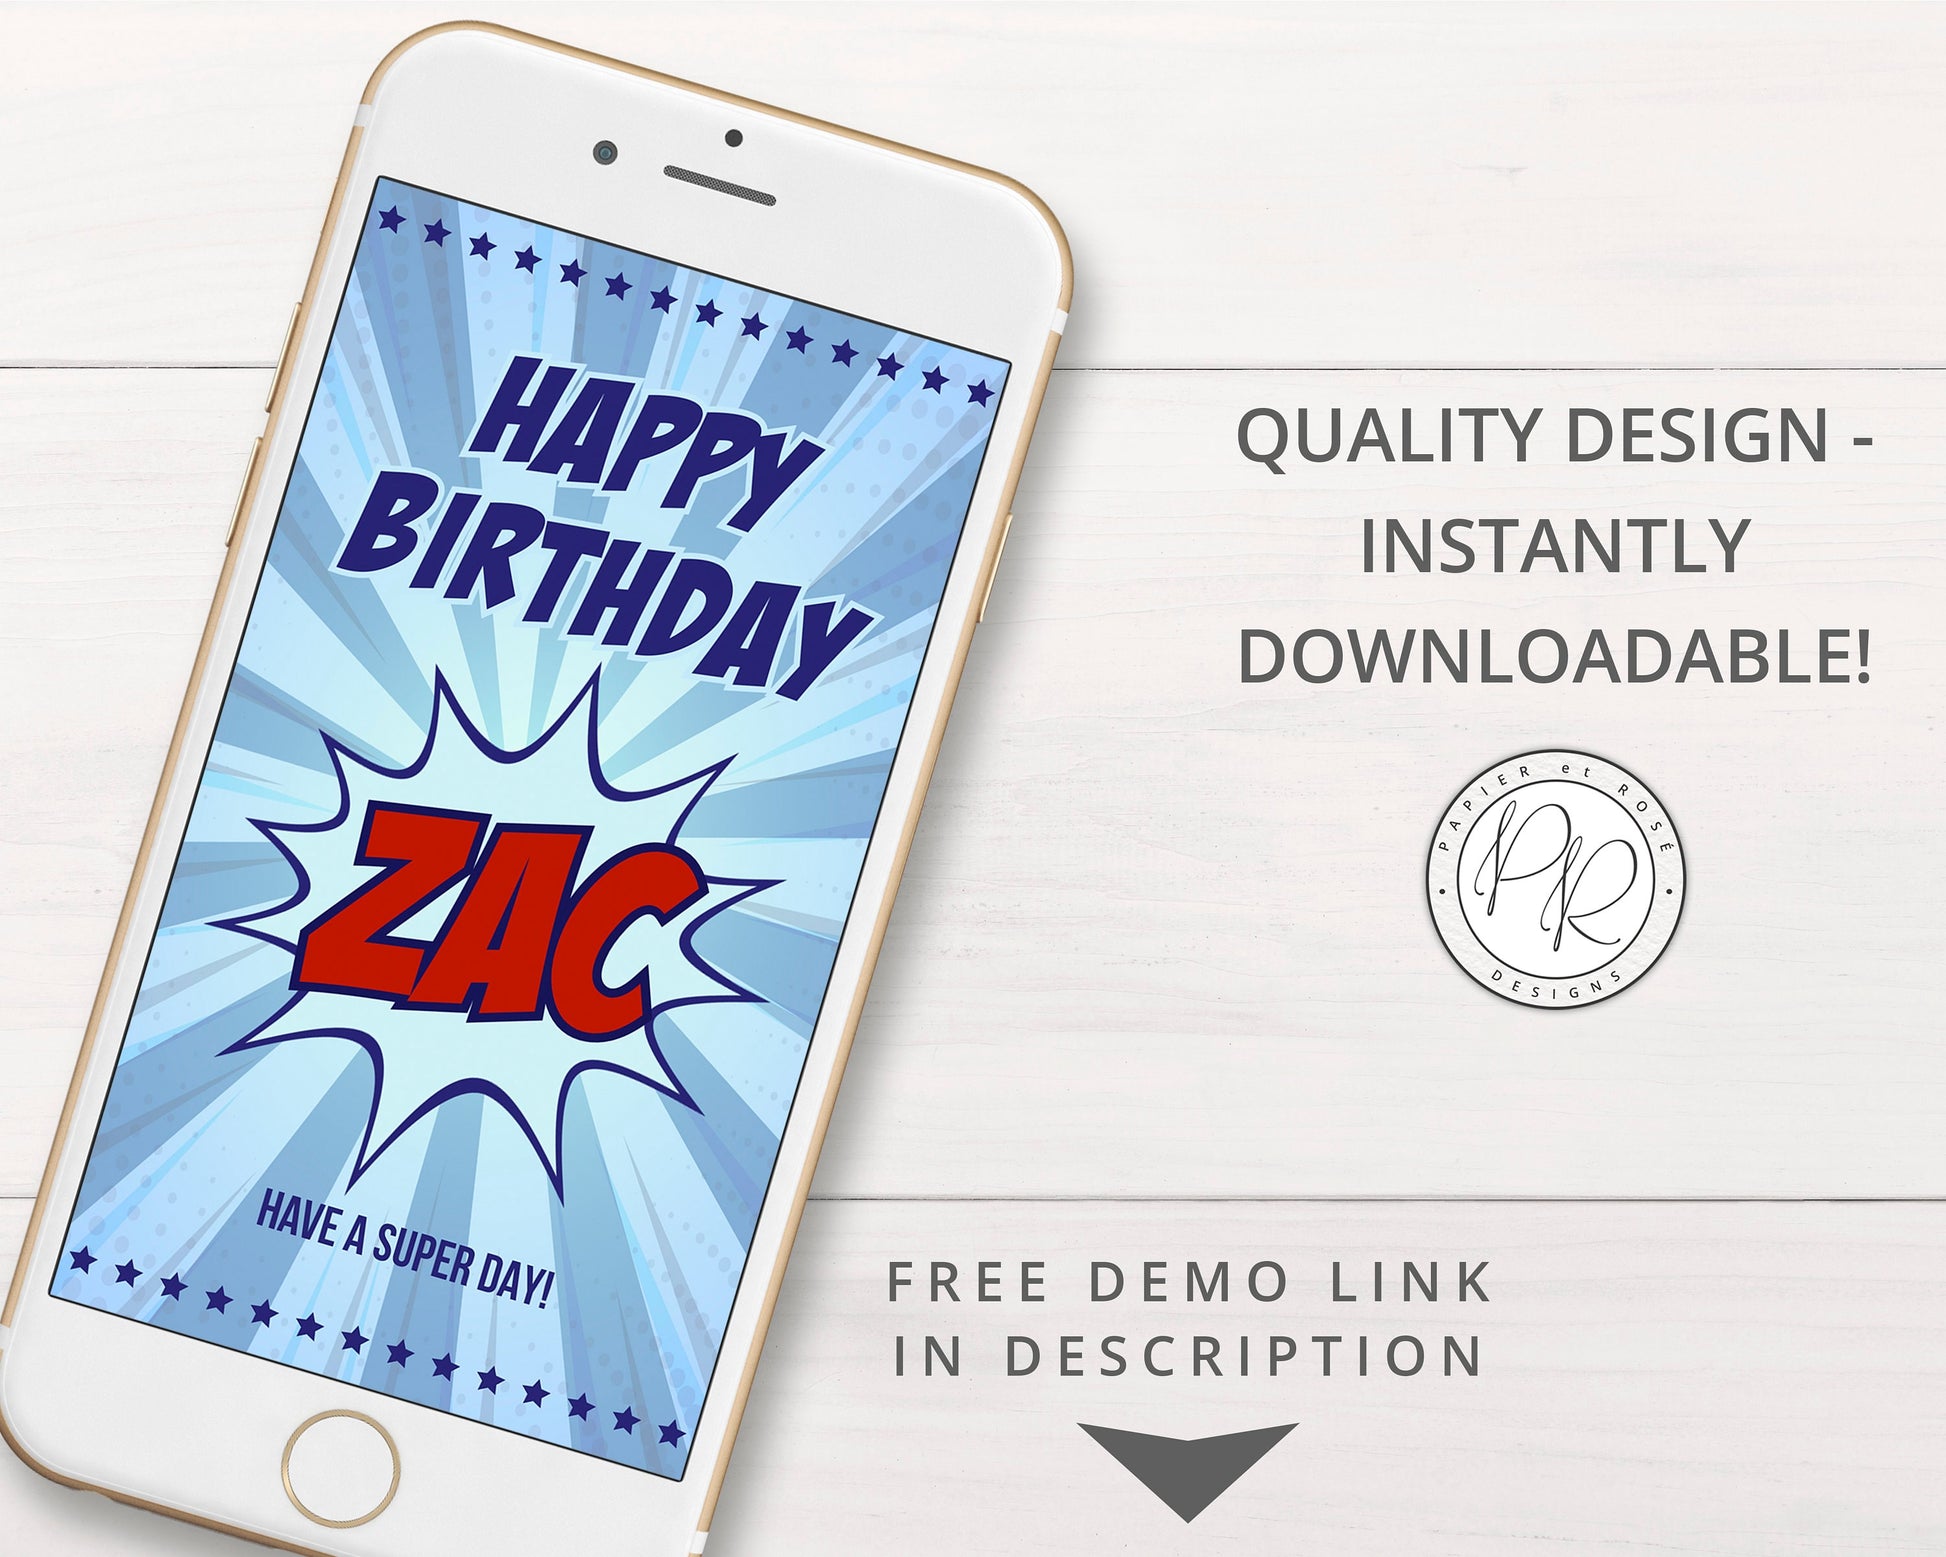 INSTANT EDIT YOURSELF Digital iPhone Samsung Phone Birthday E-Card message | Birthday Card Editable Template - PRD012